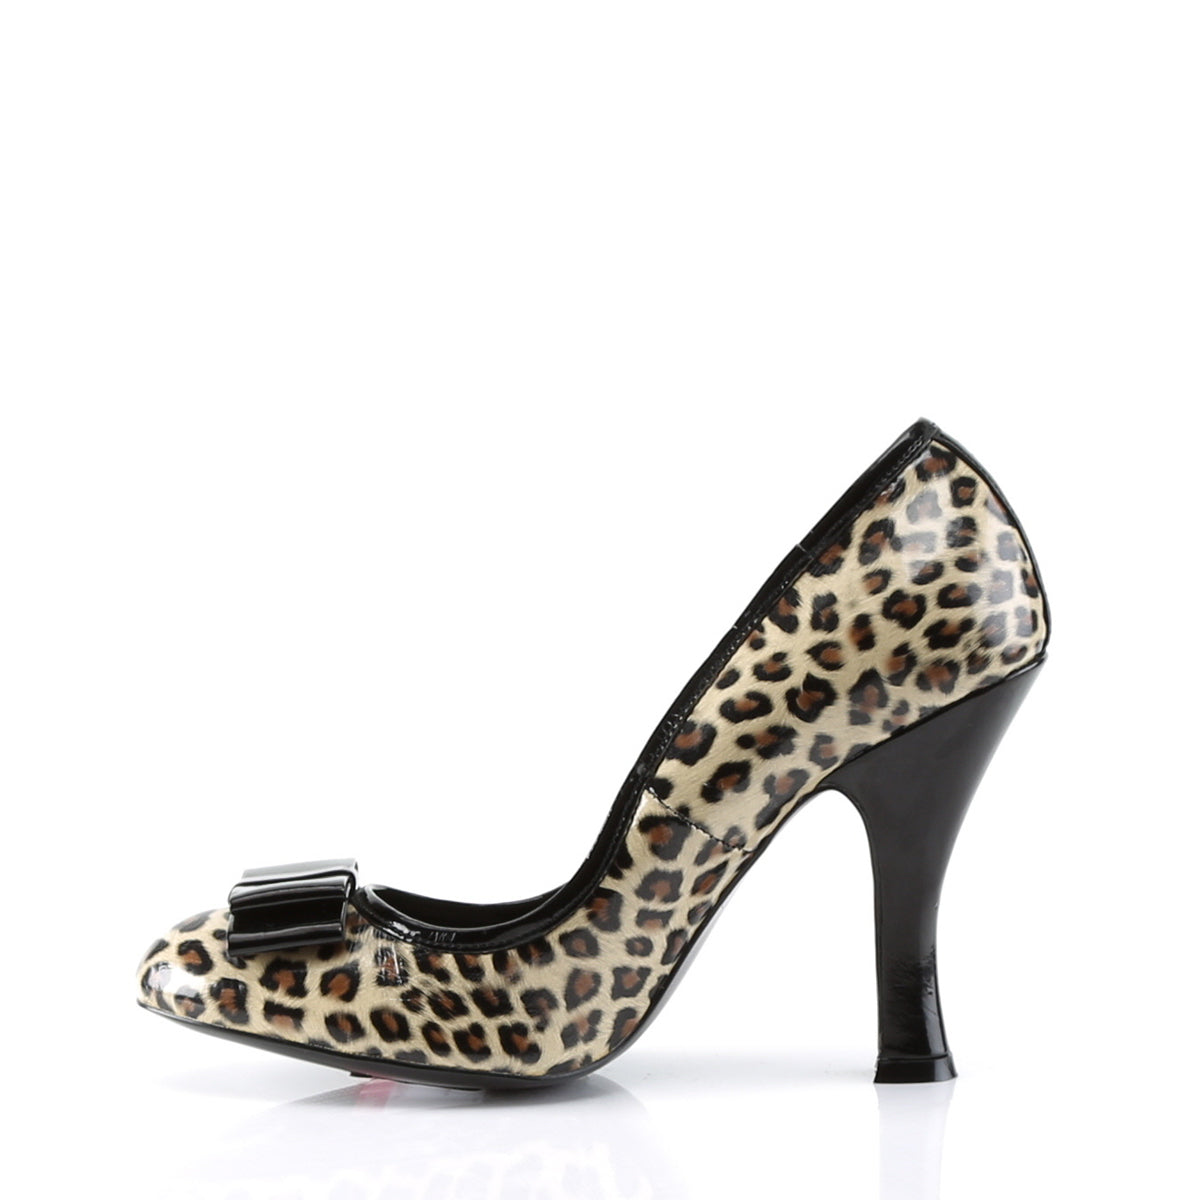 SMITTEN-01 Sexy 4" Heel Tan (Cheetah Print) Fetish Footwear-Pin Up Couture- Sexy Shoes Pole Dance Heels